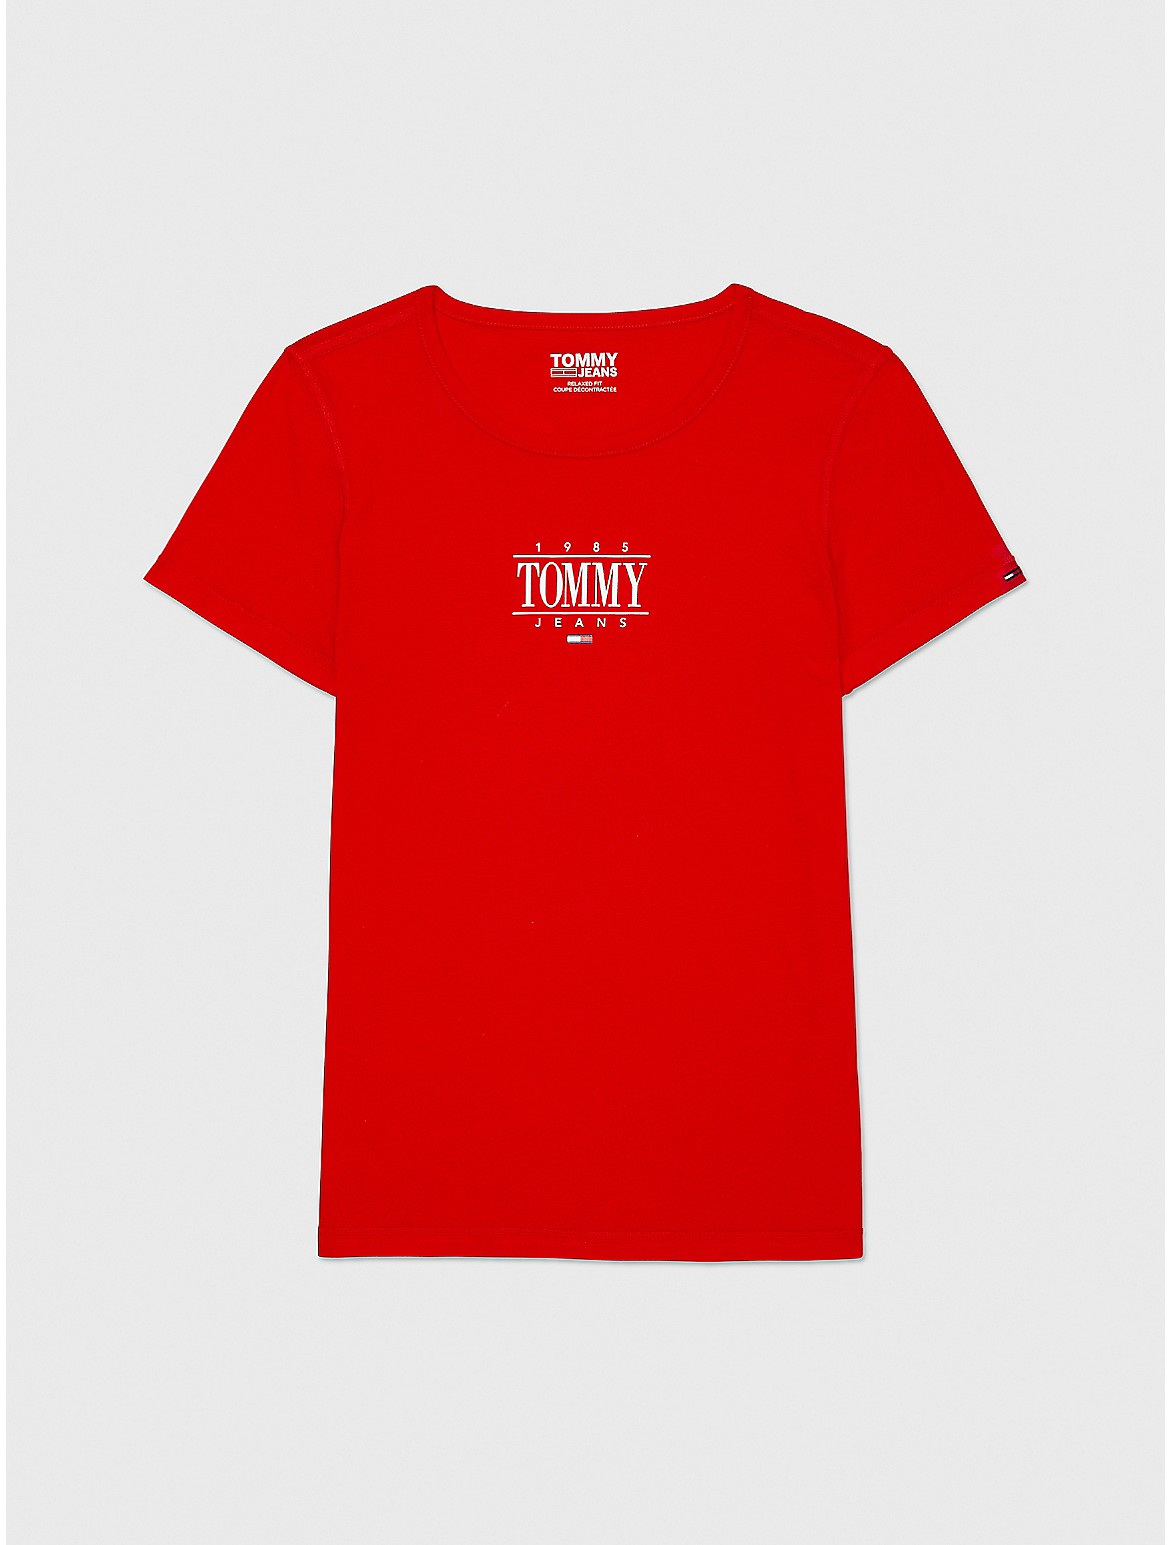 Tommy Hilfiger Women's Sensory Skinny T-Shirt